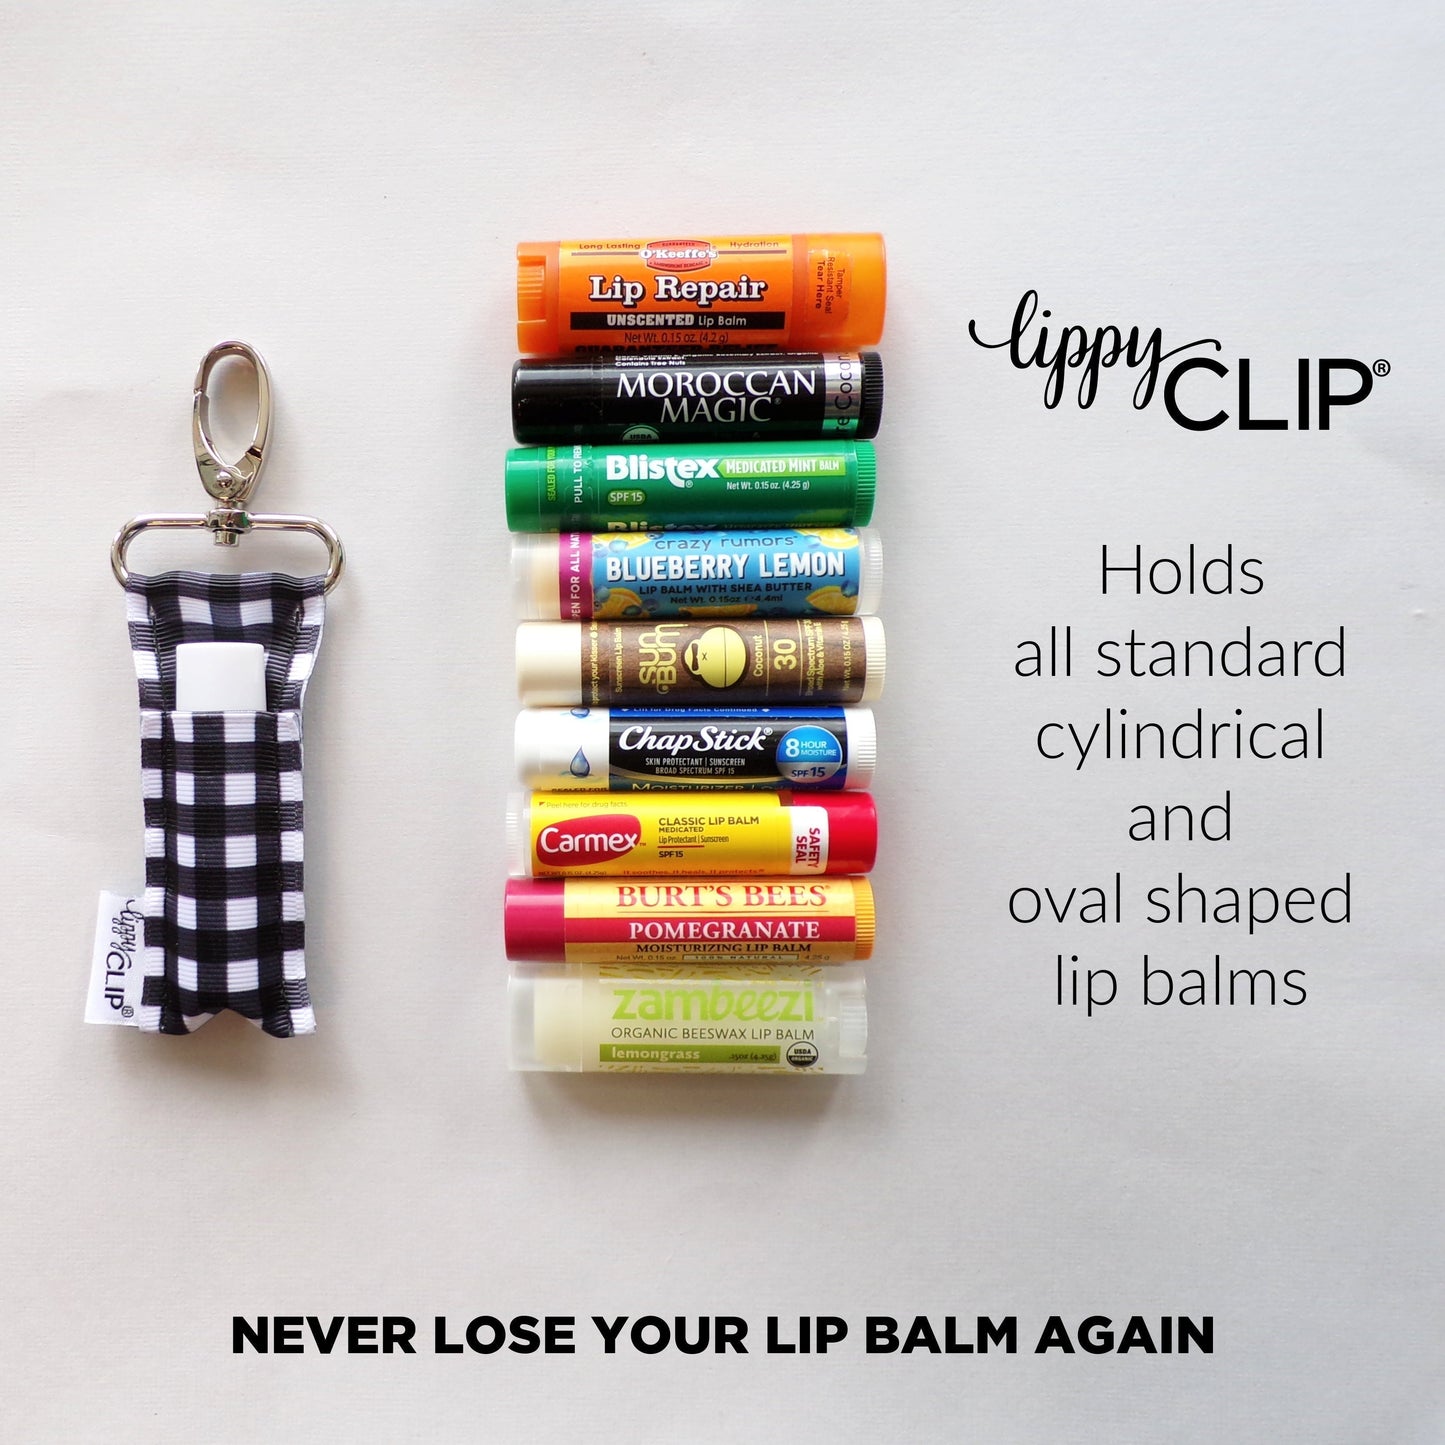 Crosses LippyClip® Lip Balm Holder